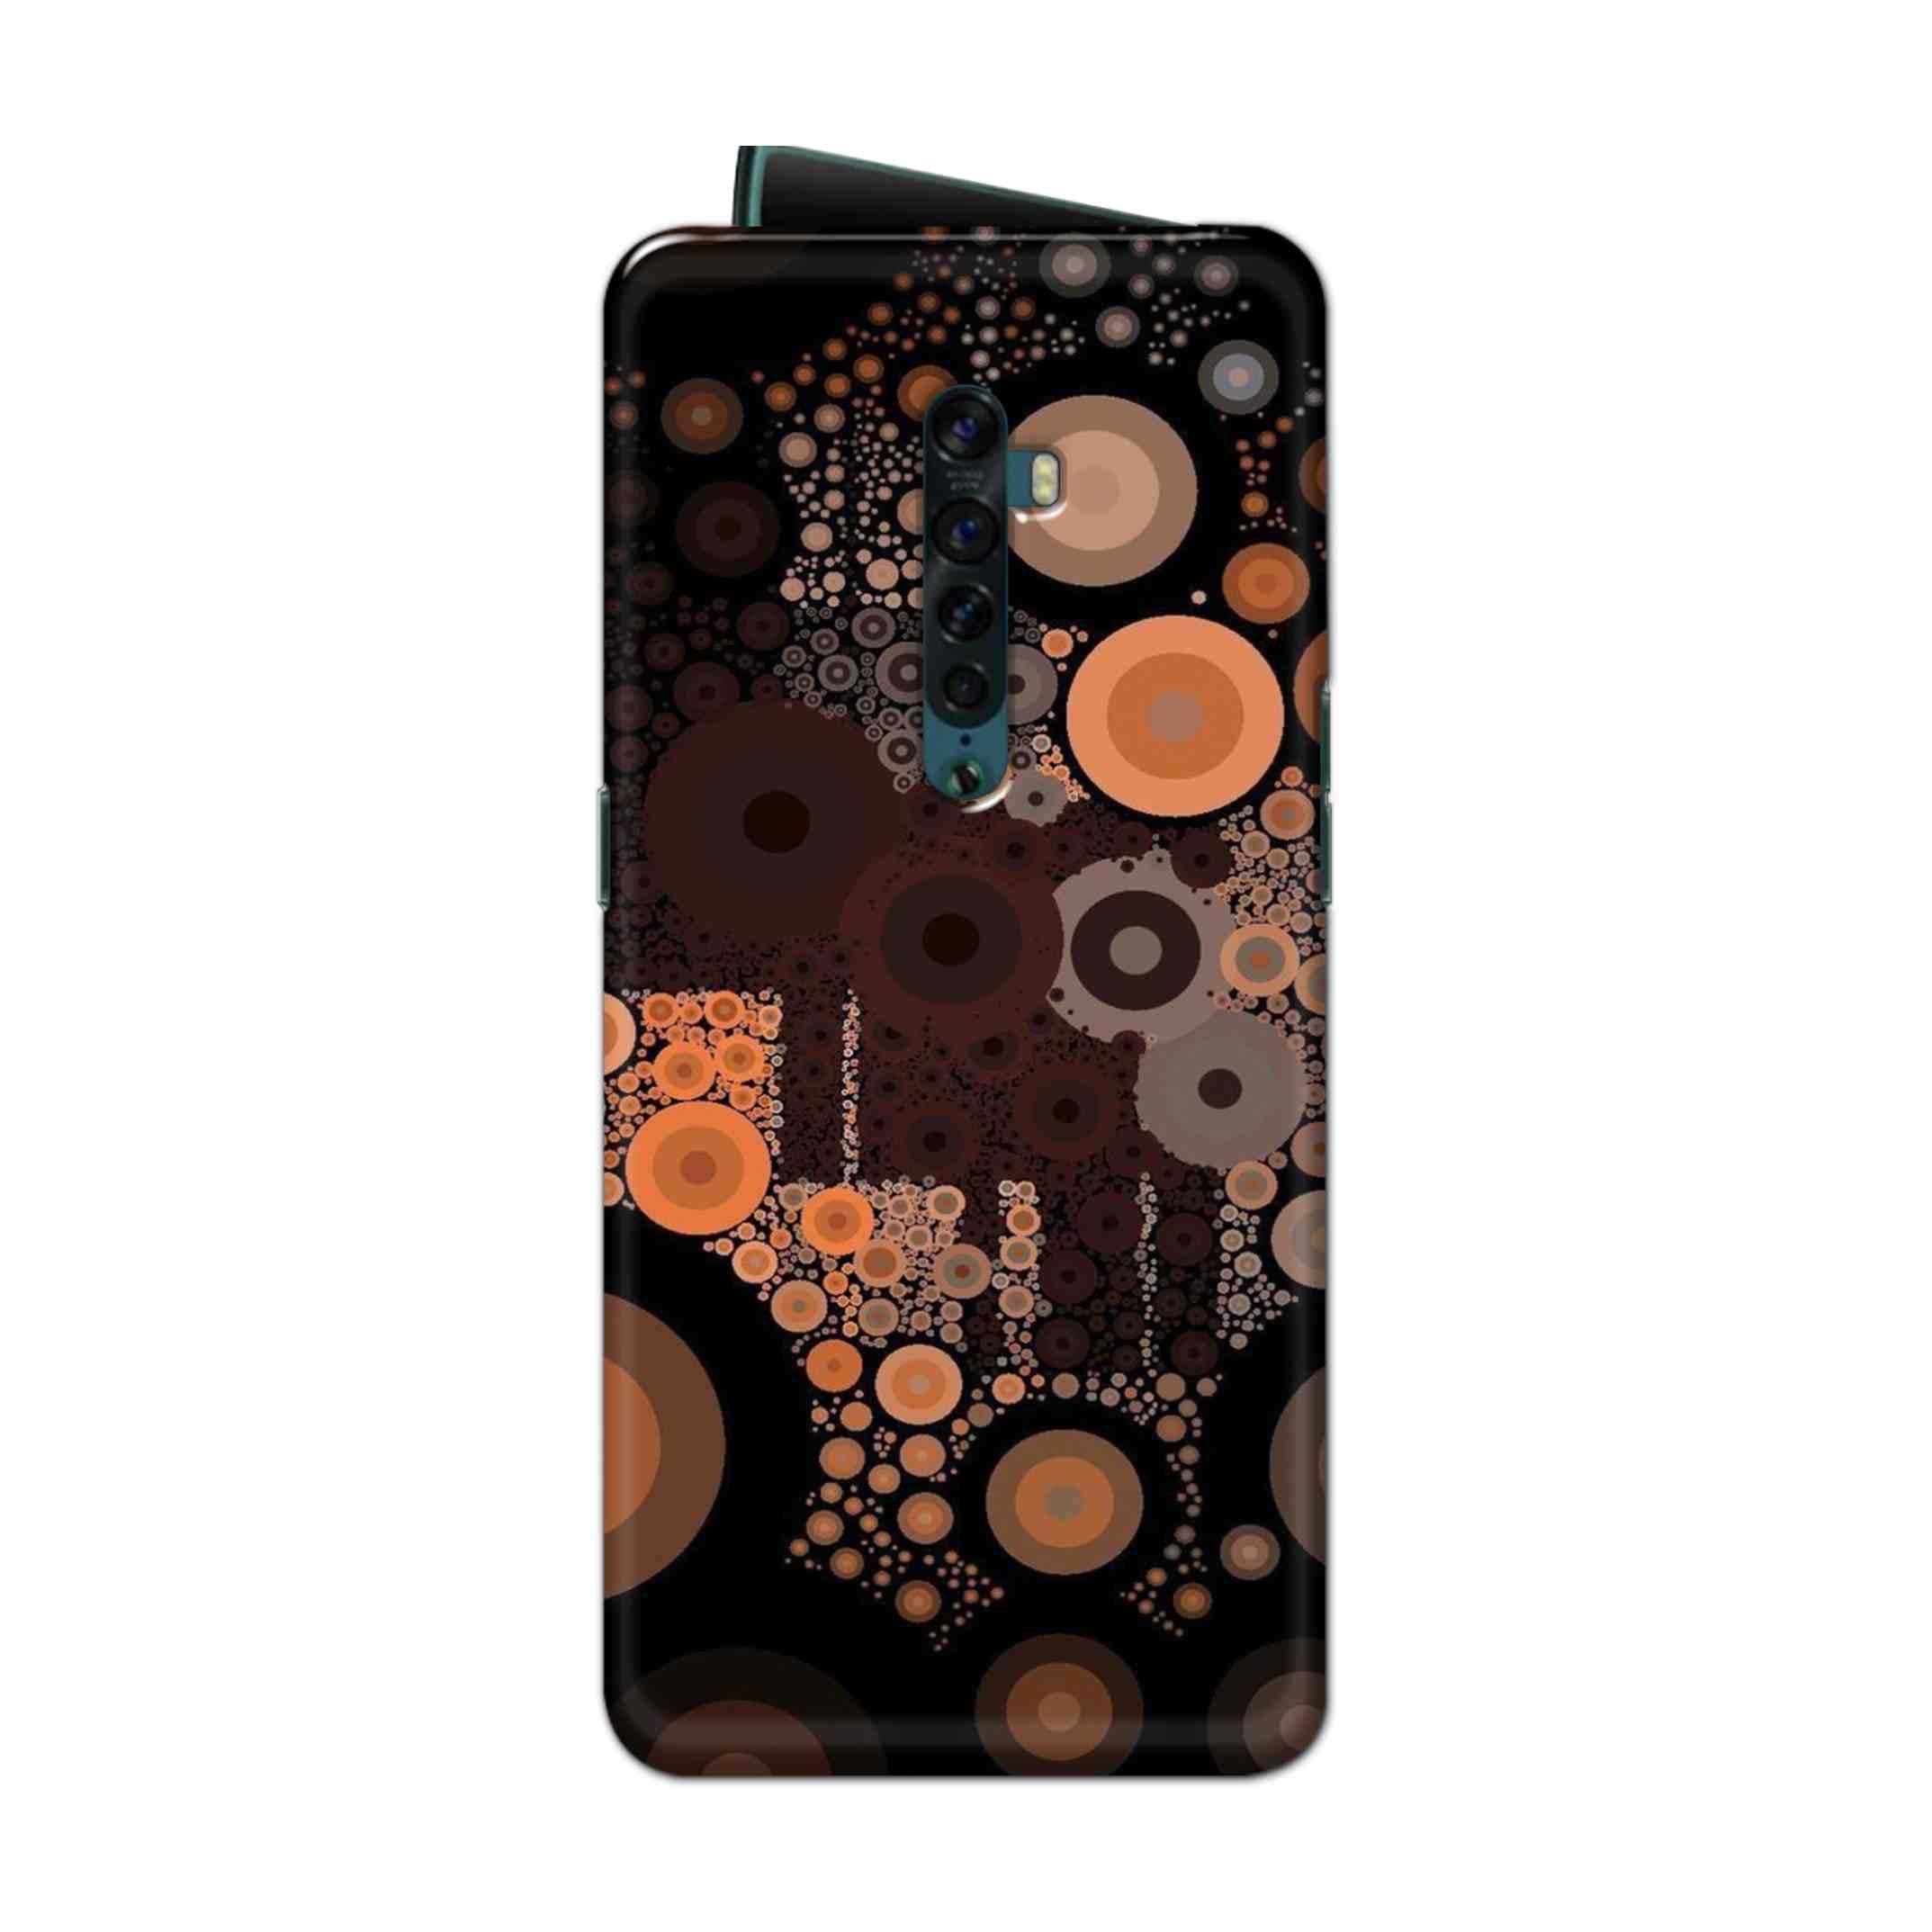 Buy Golden Circle Hard Back Mobile Phone Case Cover For Oppo Reno 2 Online